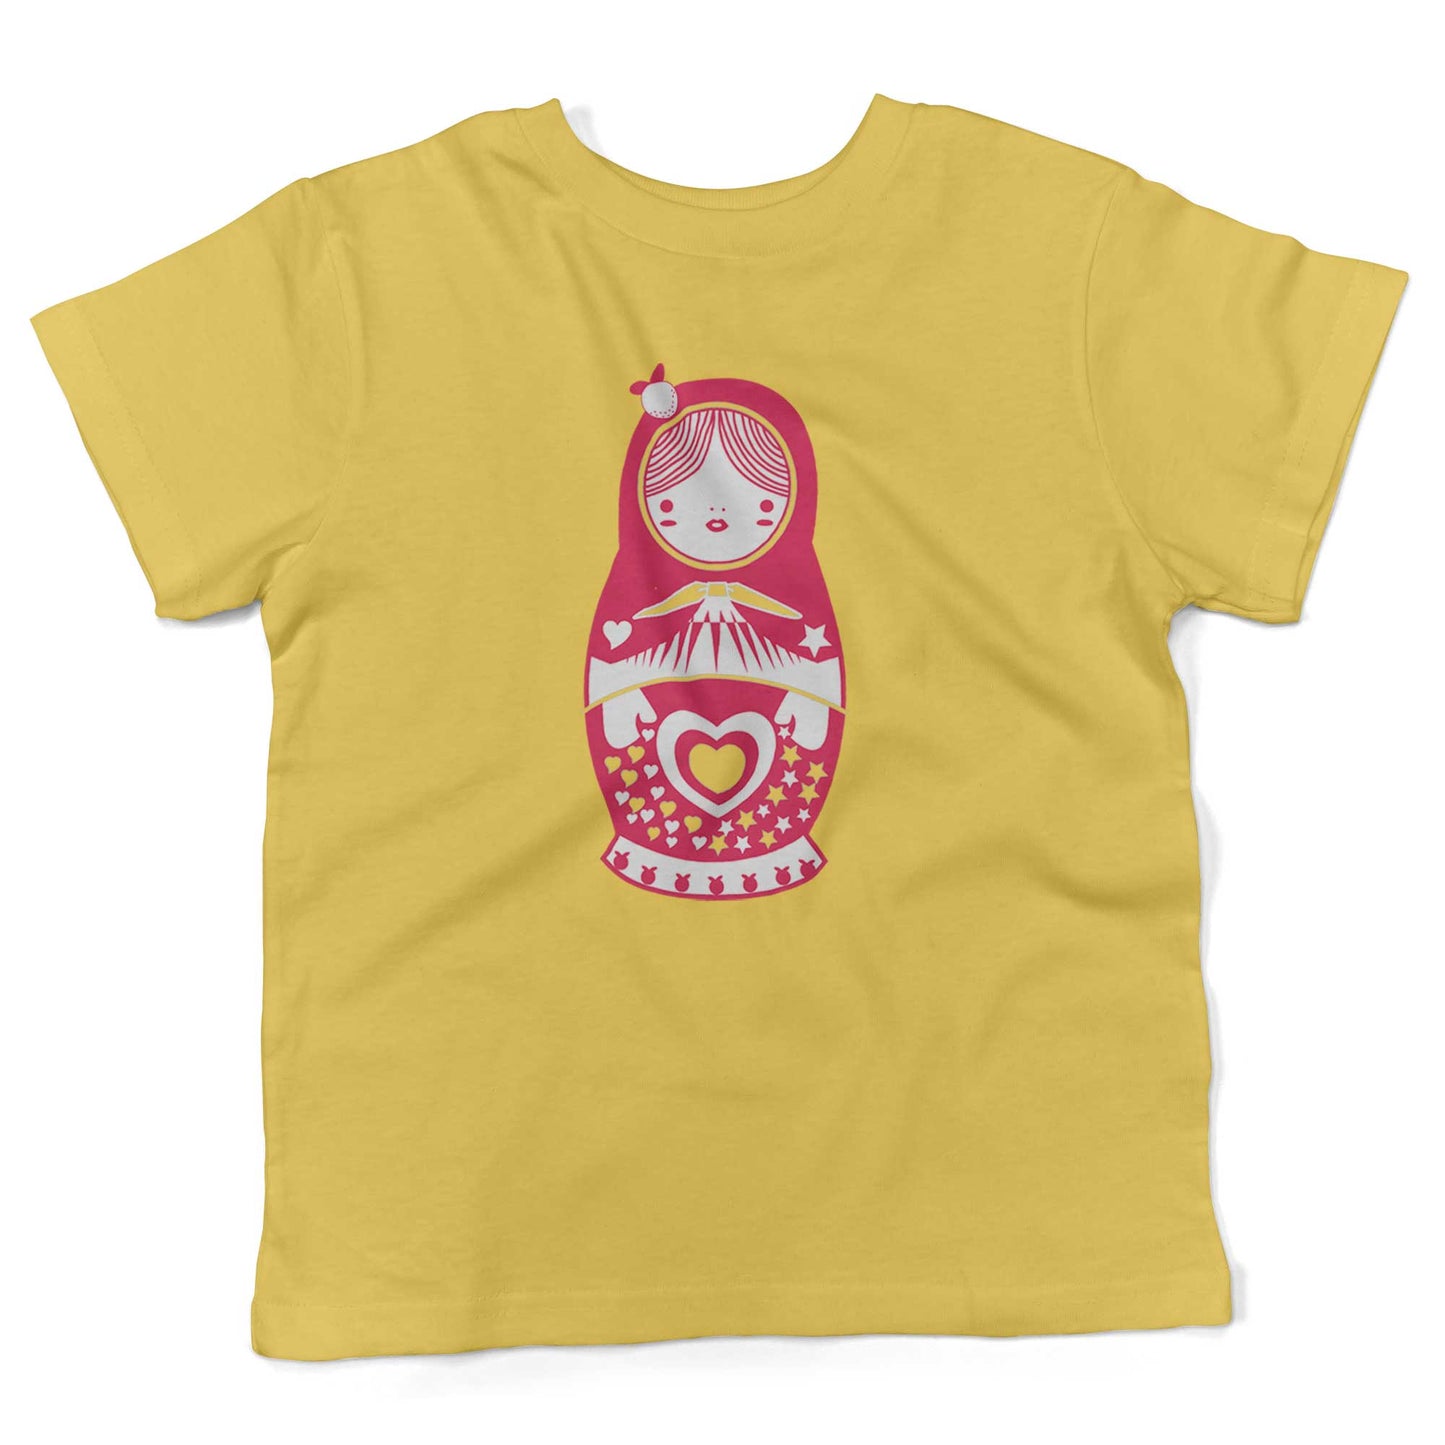 Russian Doll Toddler Shirt-Sunshine Yellow-2T